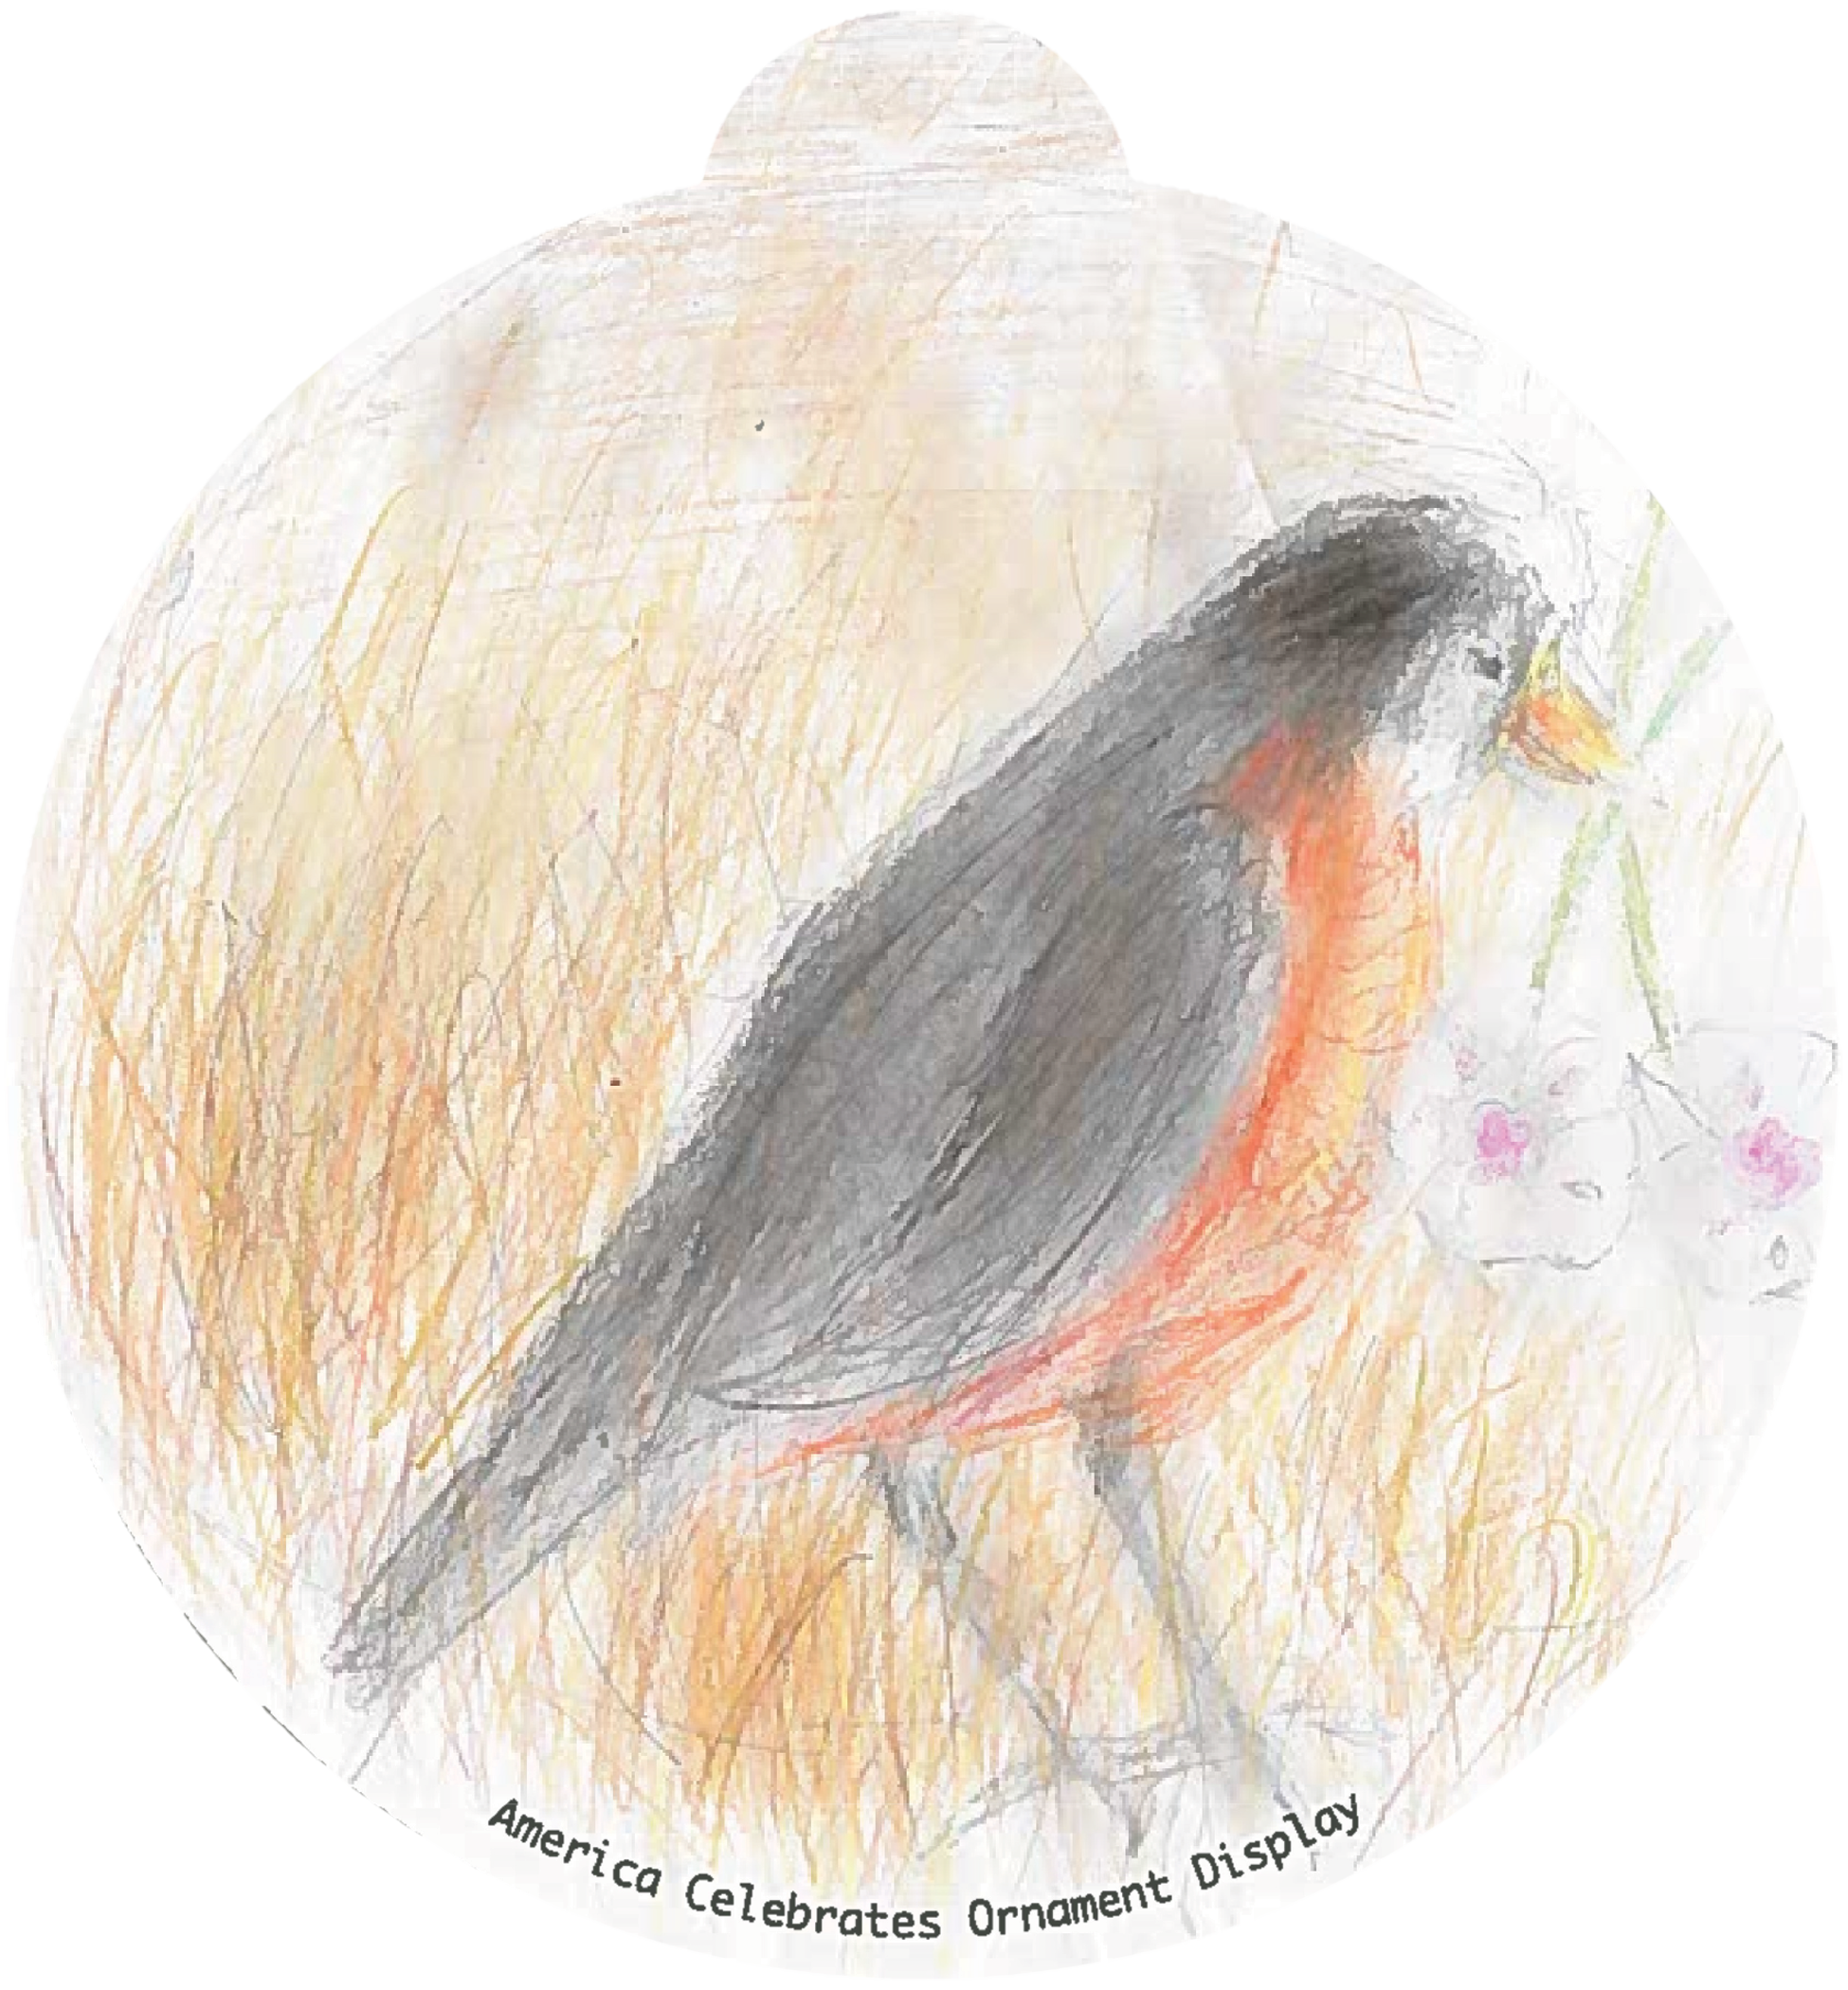 ornament depicting an orange and black bird